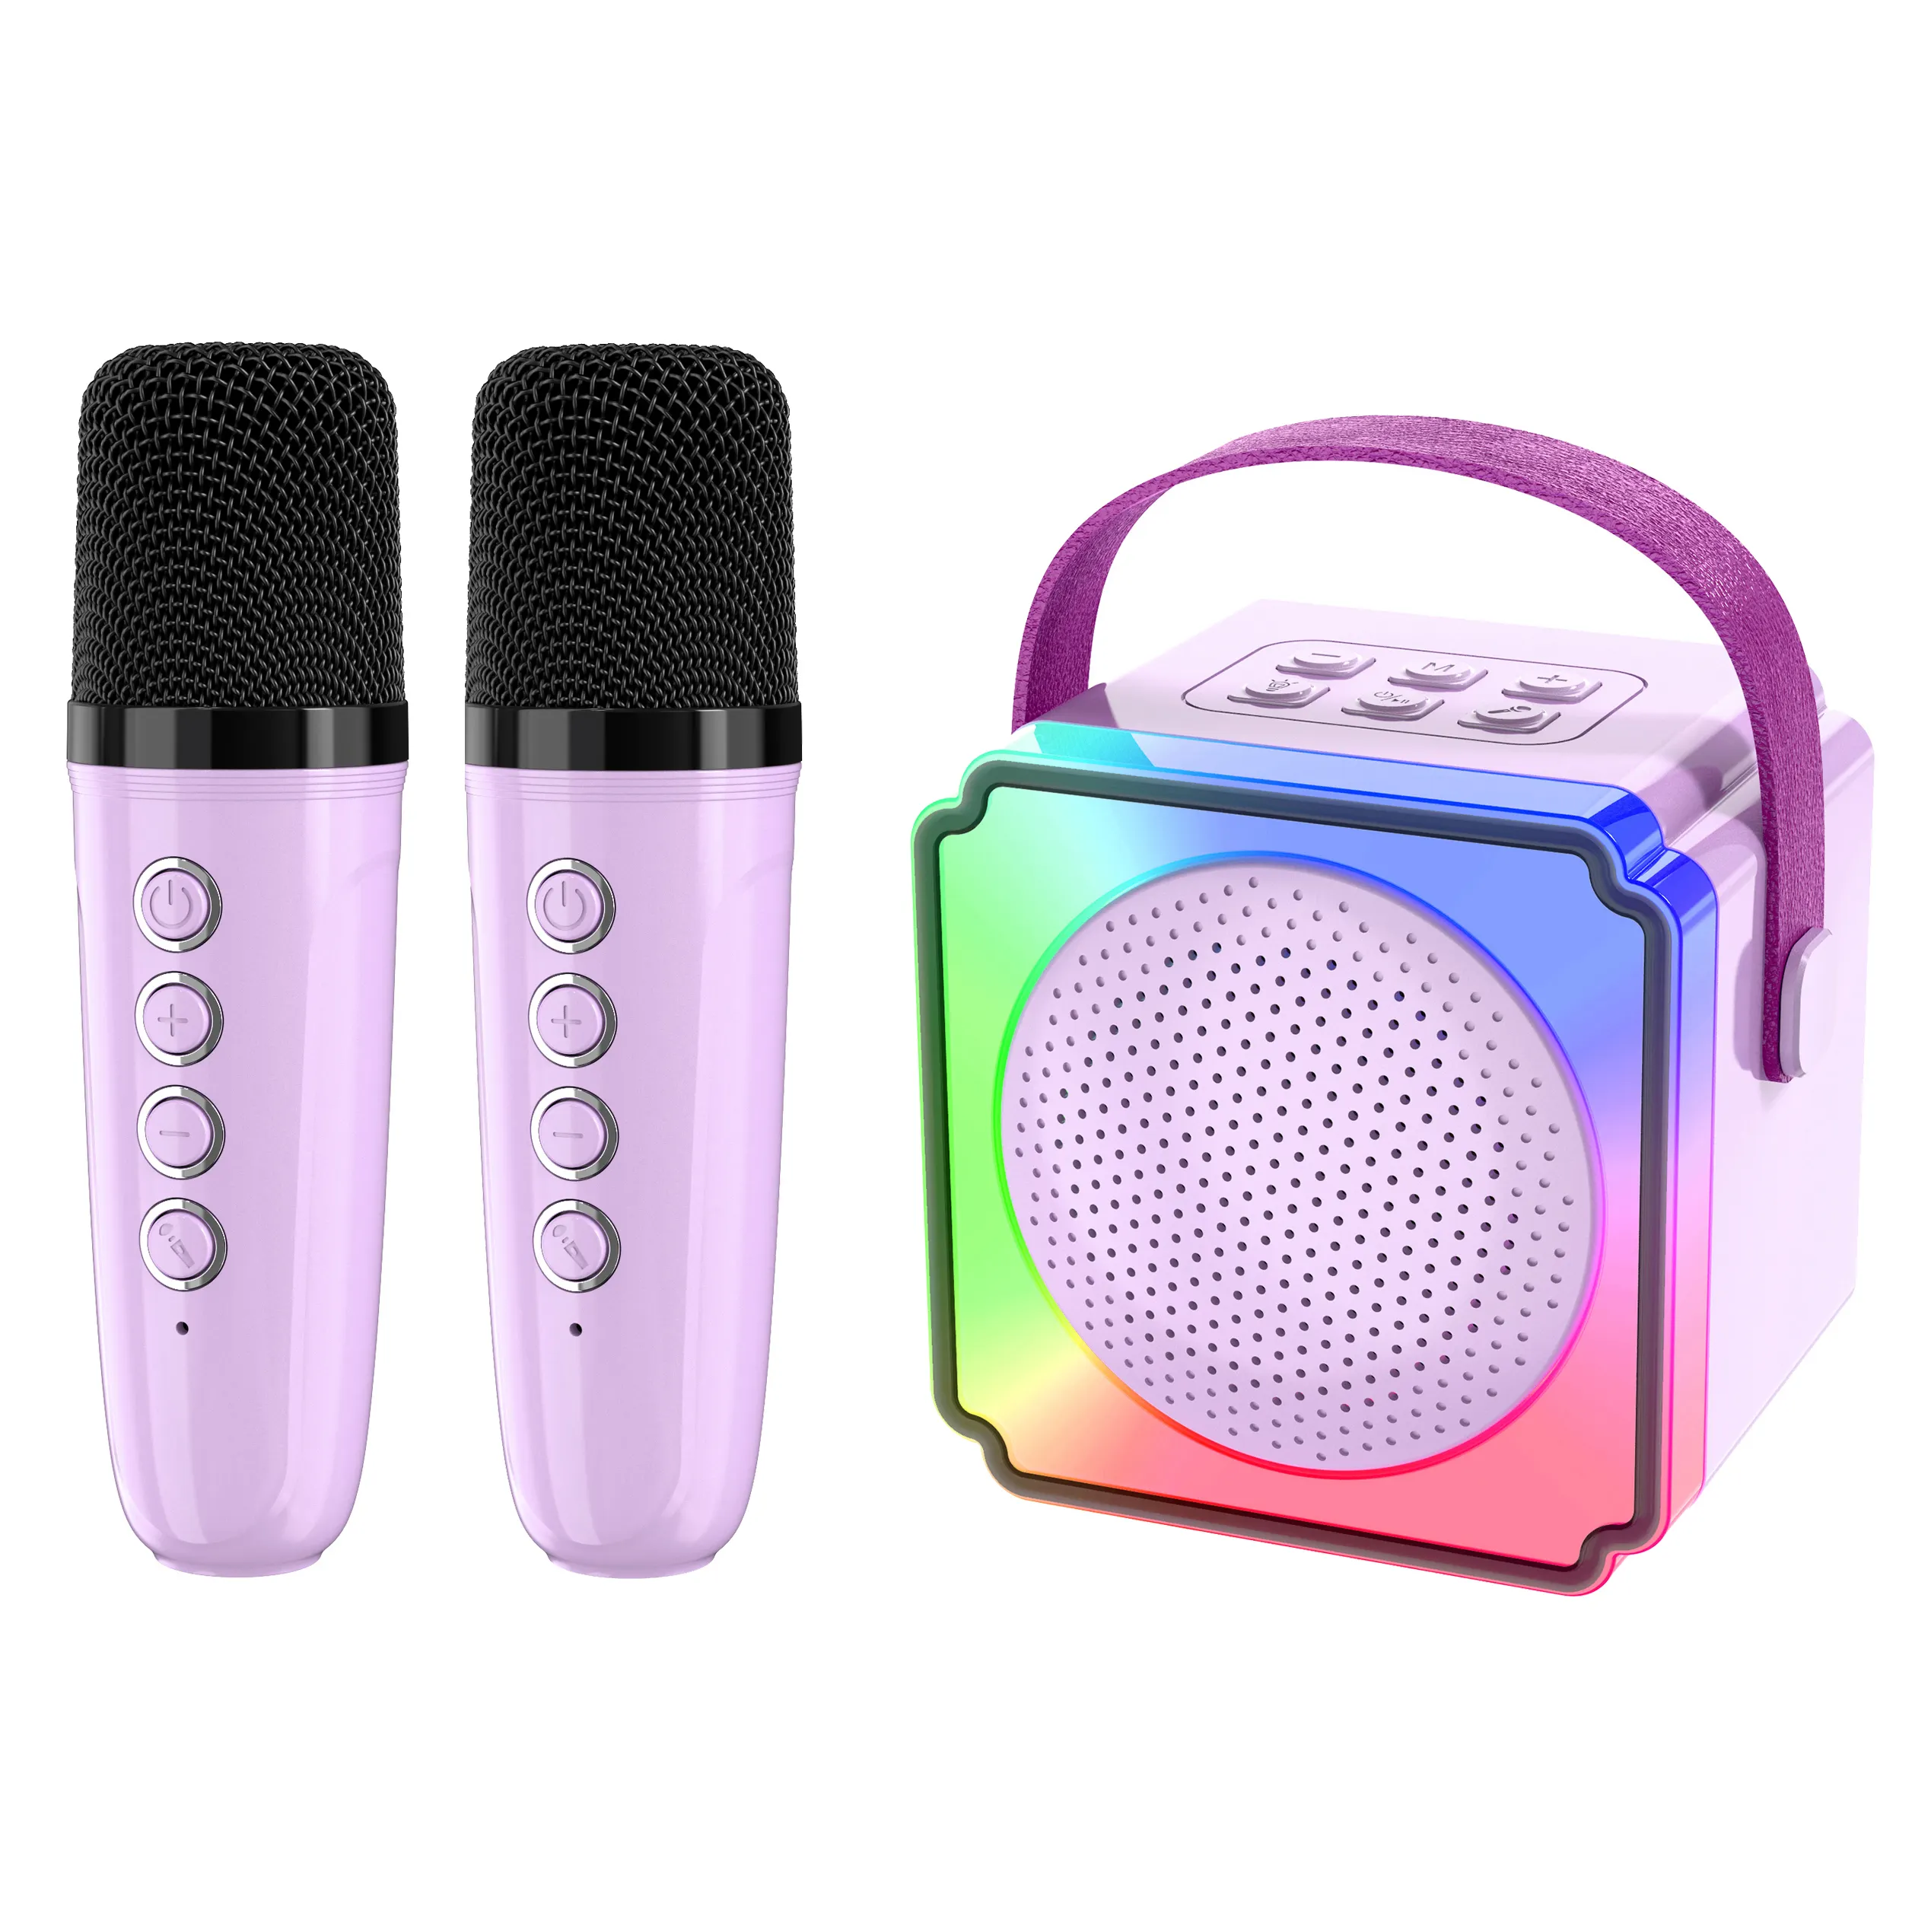 Subwoofer party music box sounds hifi outdoor wireless party karaoke mini smart portable bluetooth speaker